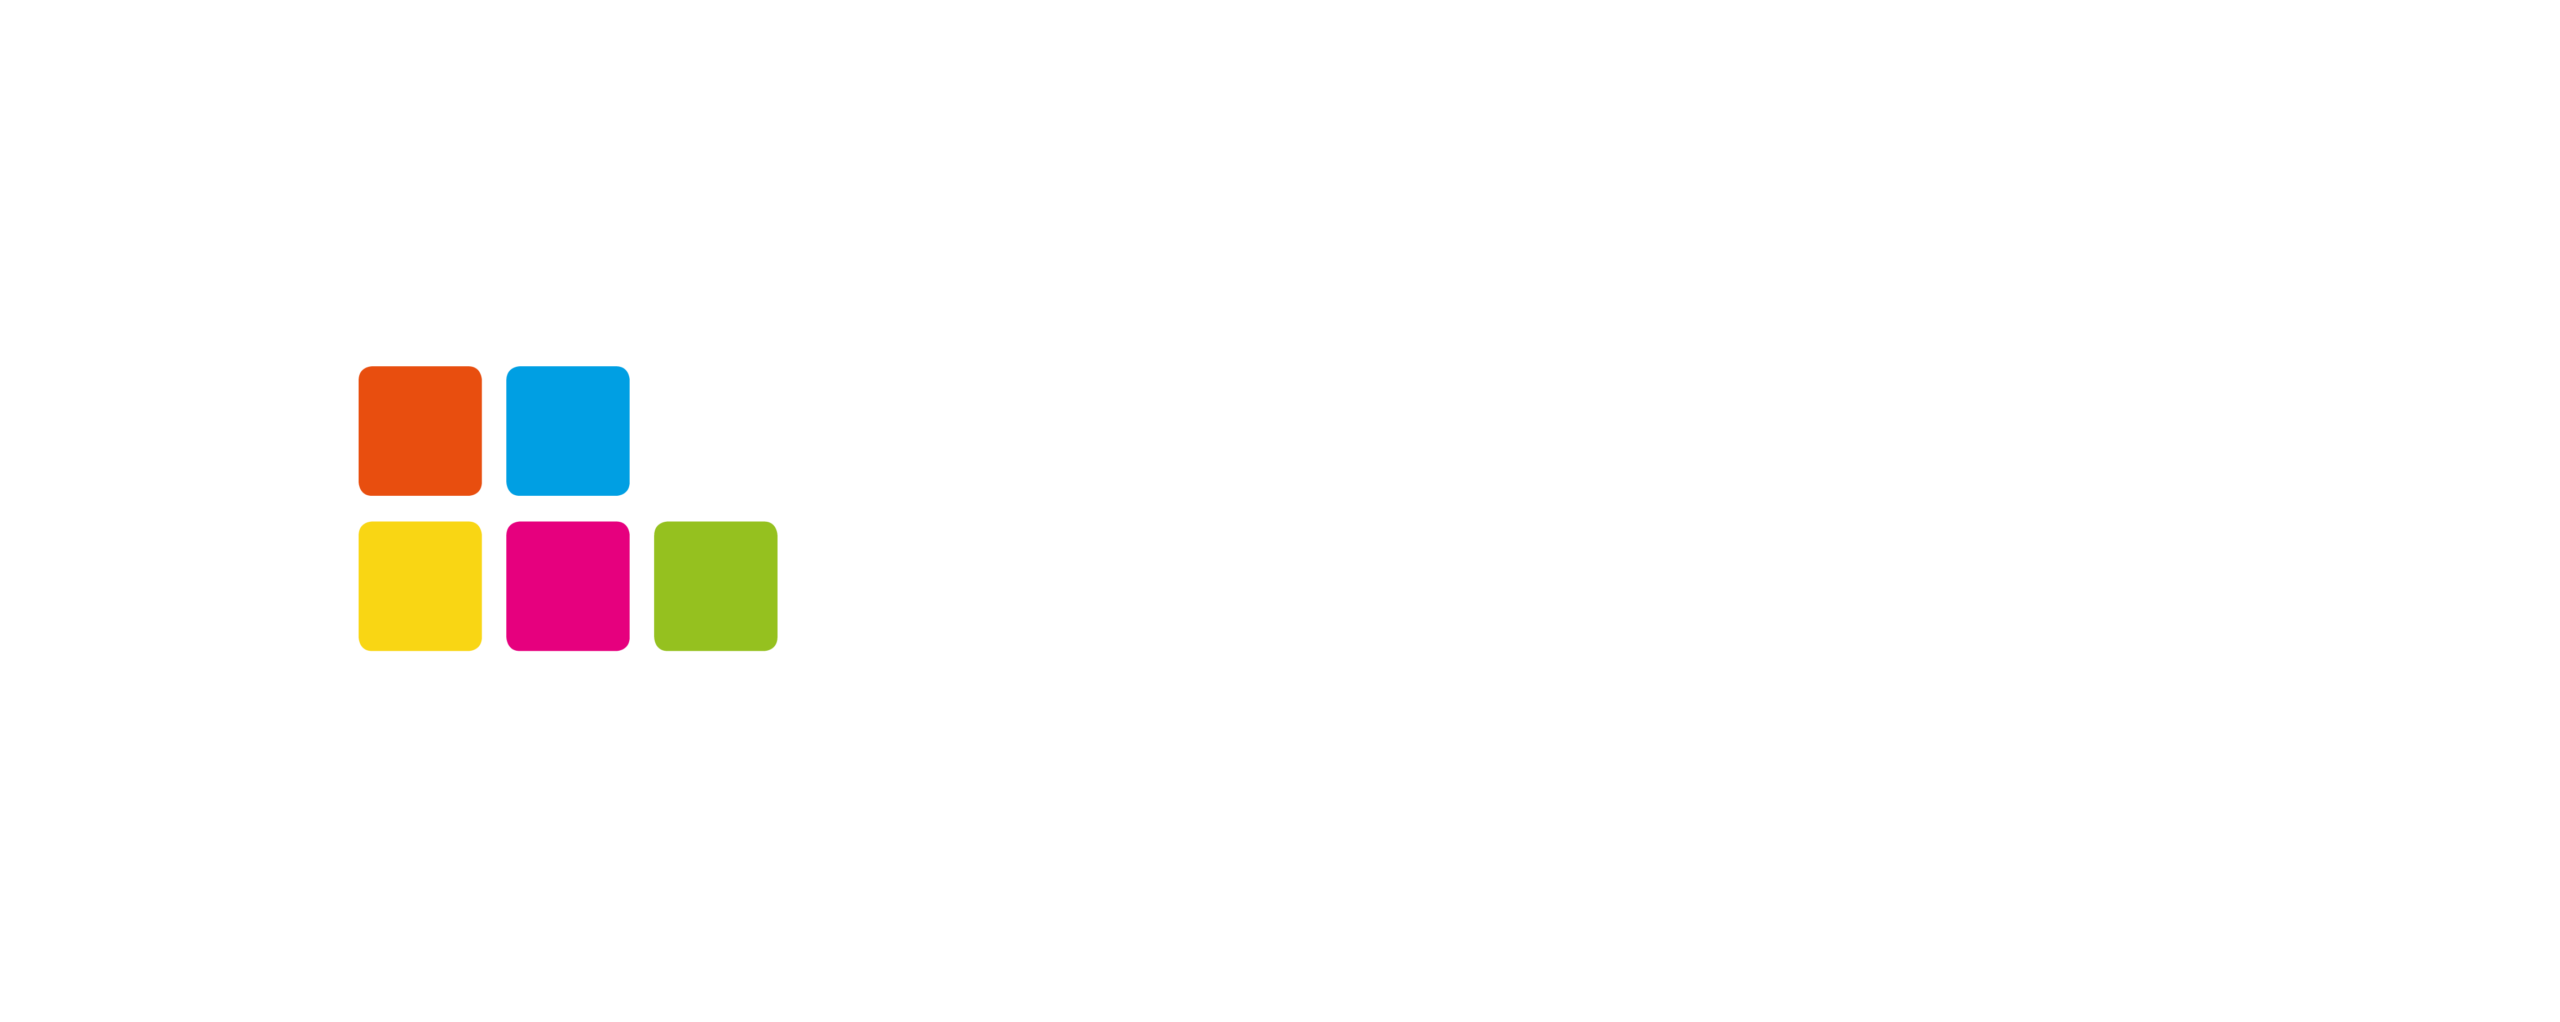 NIC-place